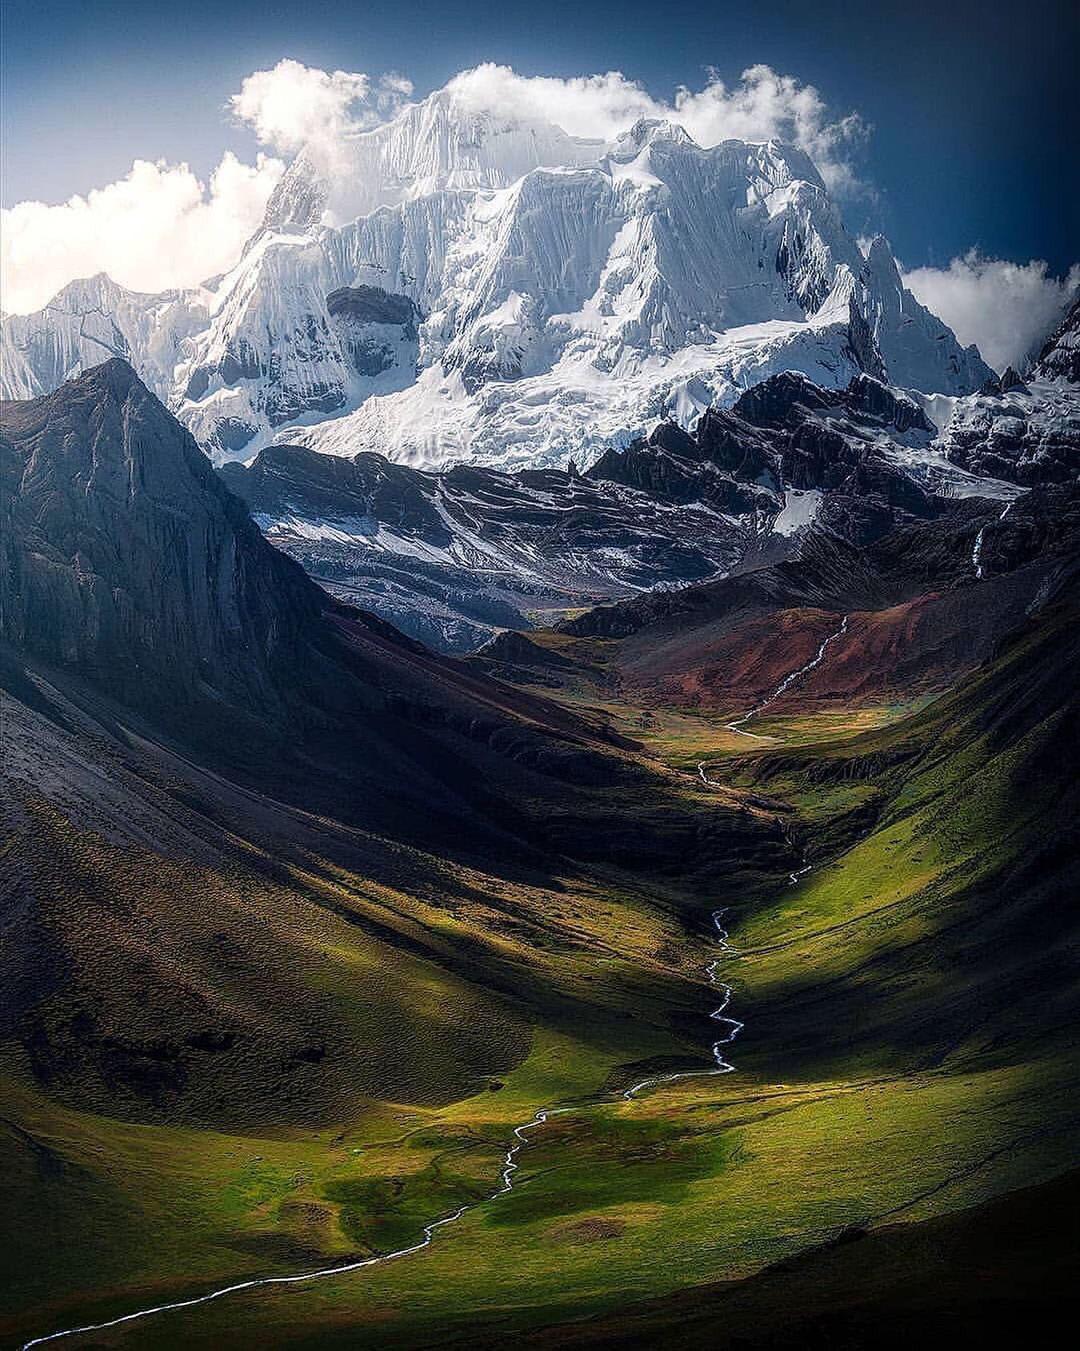 Peru’s mountain views